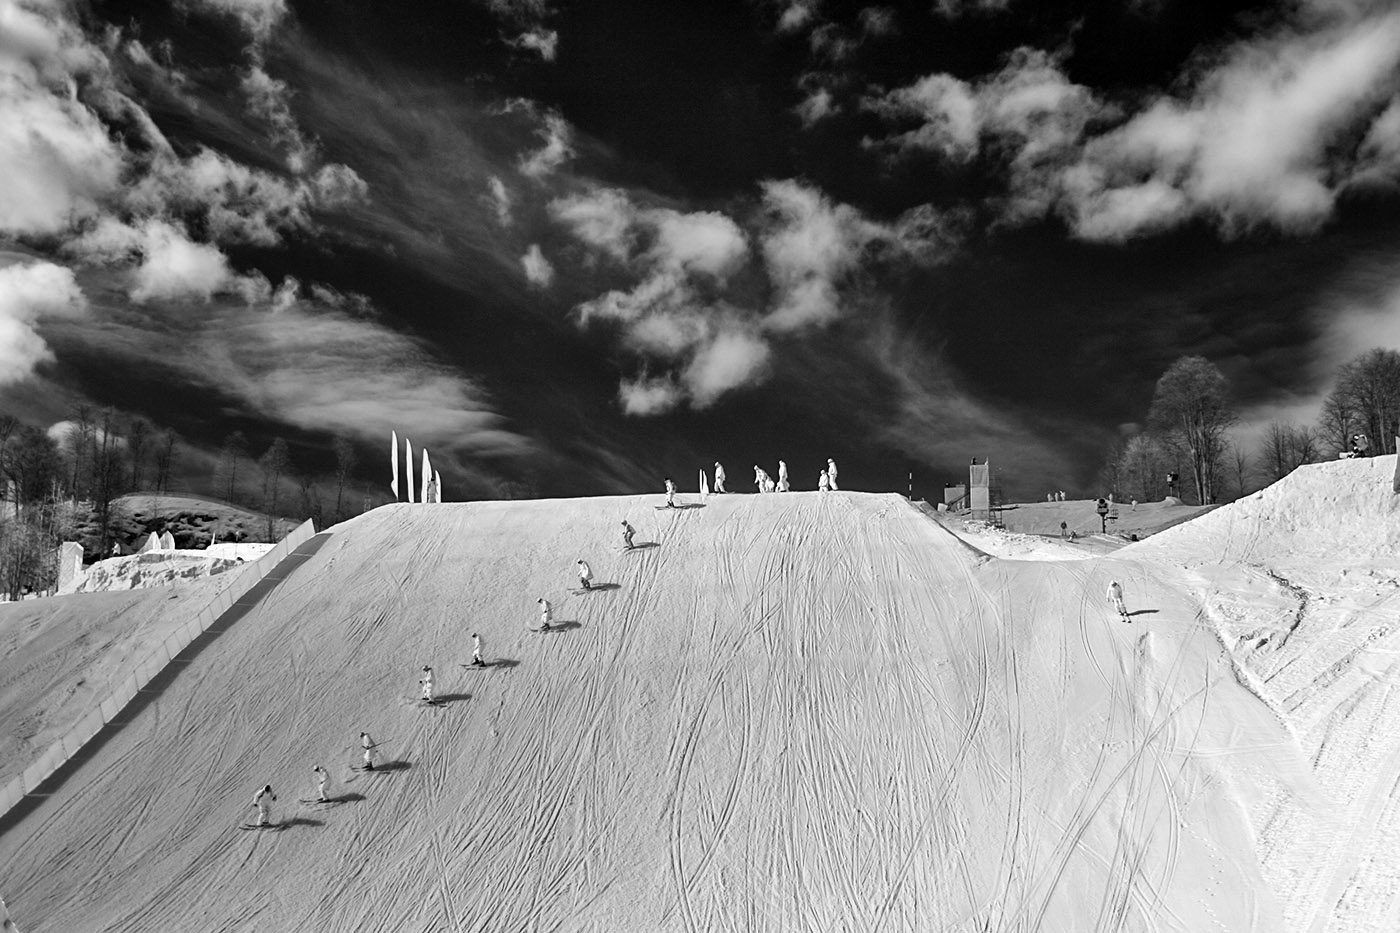 Grooming the slopestyle hill. ©2014 David Burnett/IOC : Sochi 2014 - the Winter Games : David Burnett | Photographer